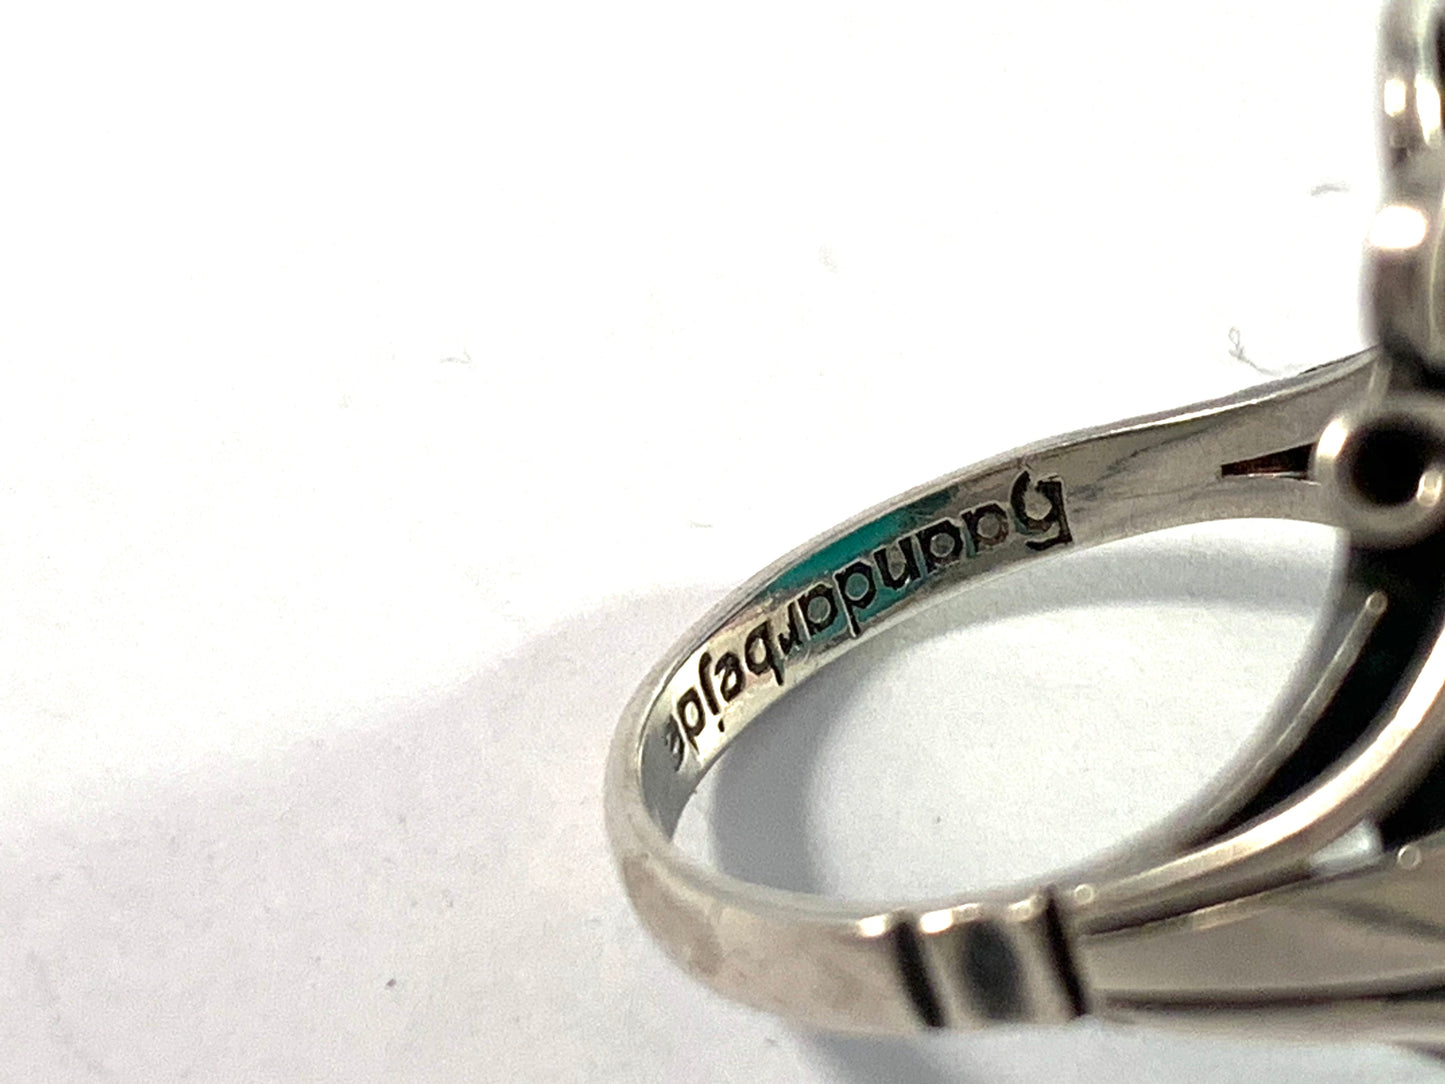 C.A Christensen (1937-1947), Denmark 830 Silver Chalcedony Ring